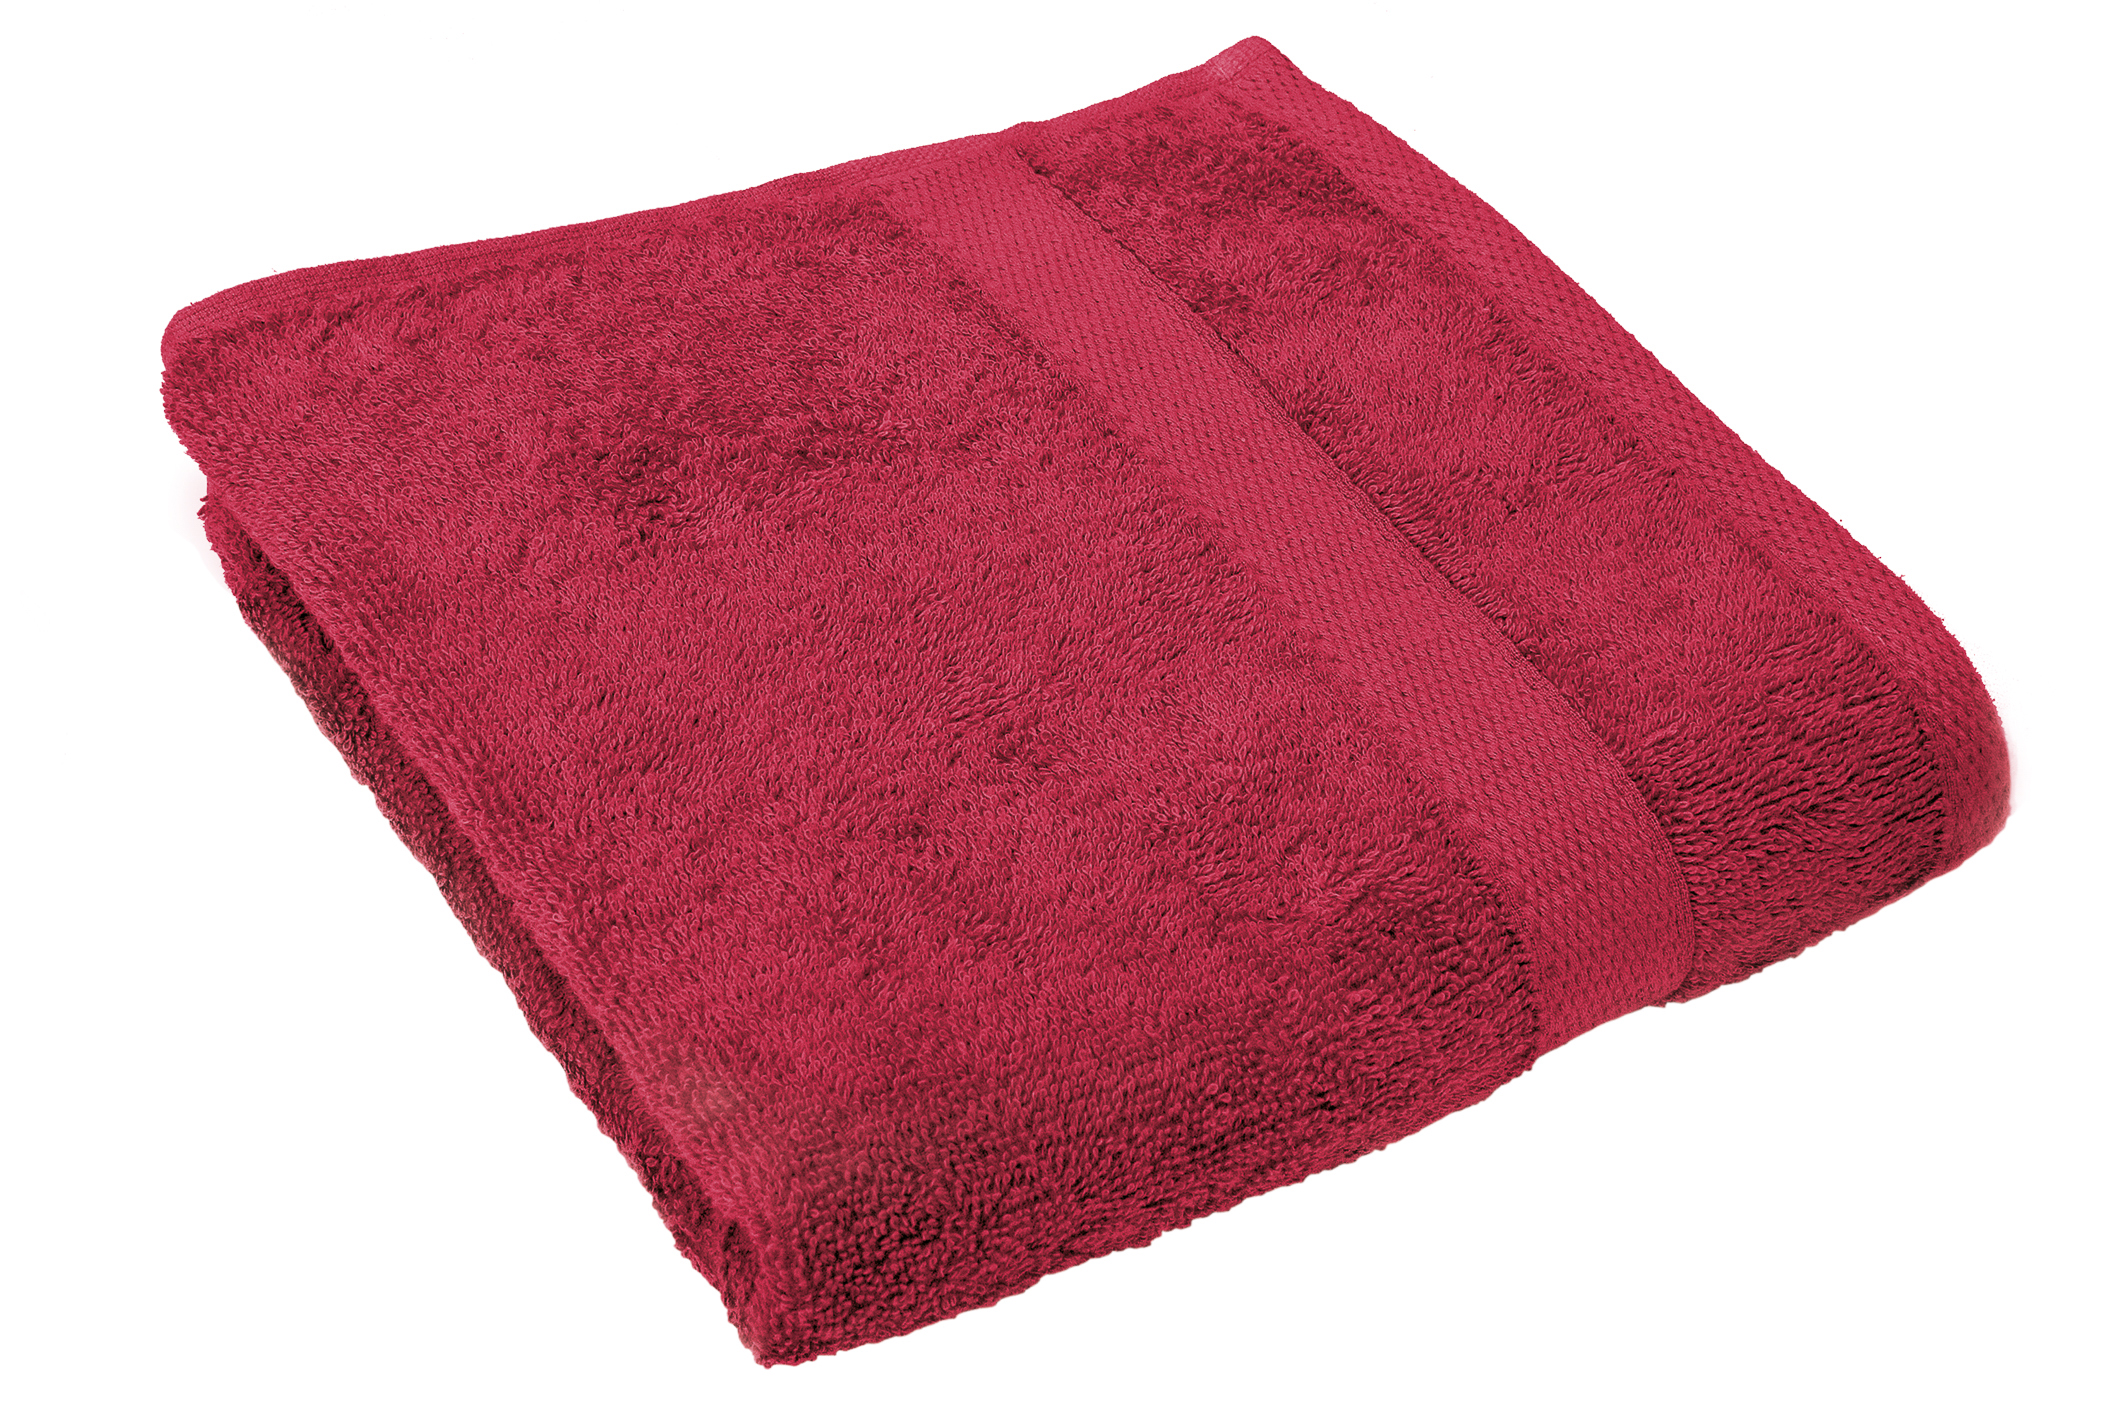 Shower towel 100x150cm, red